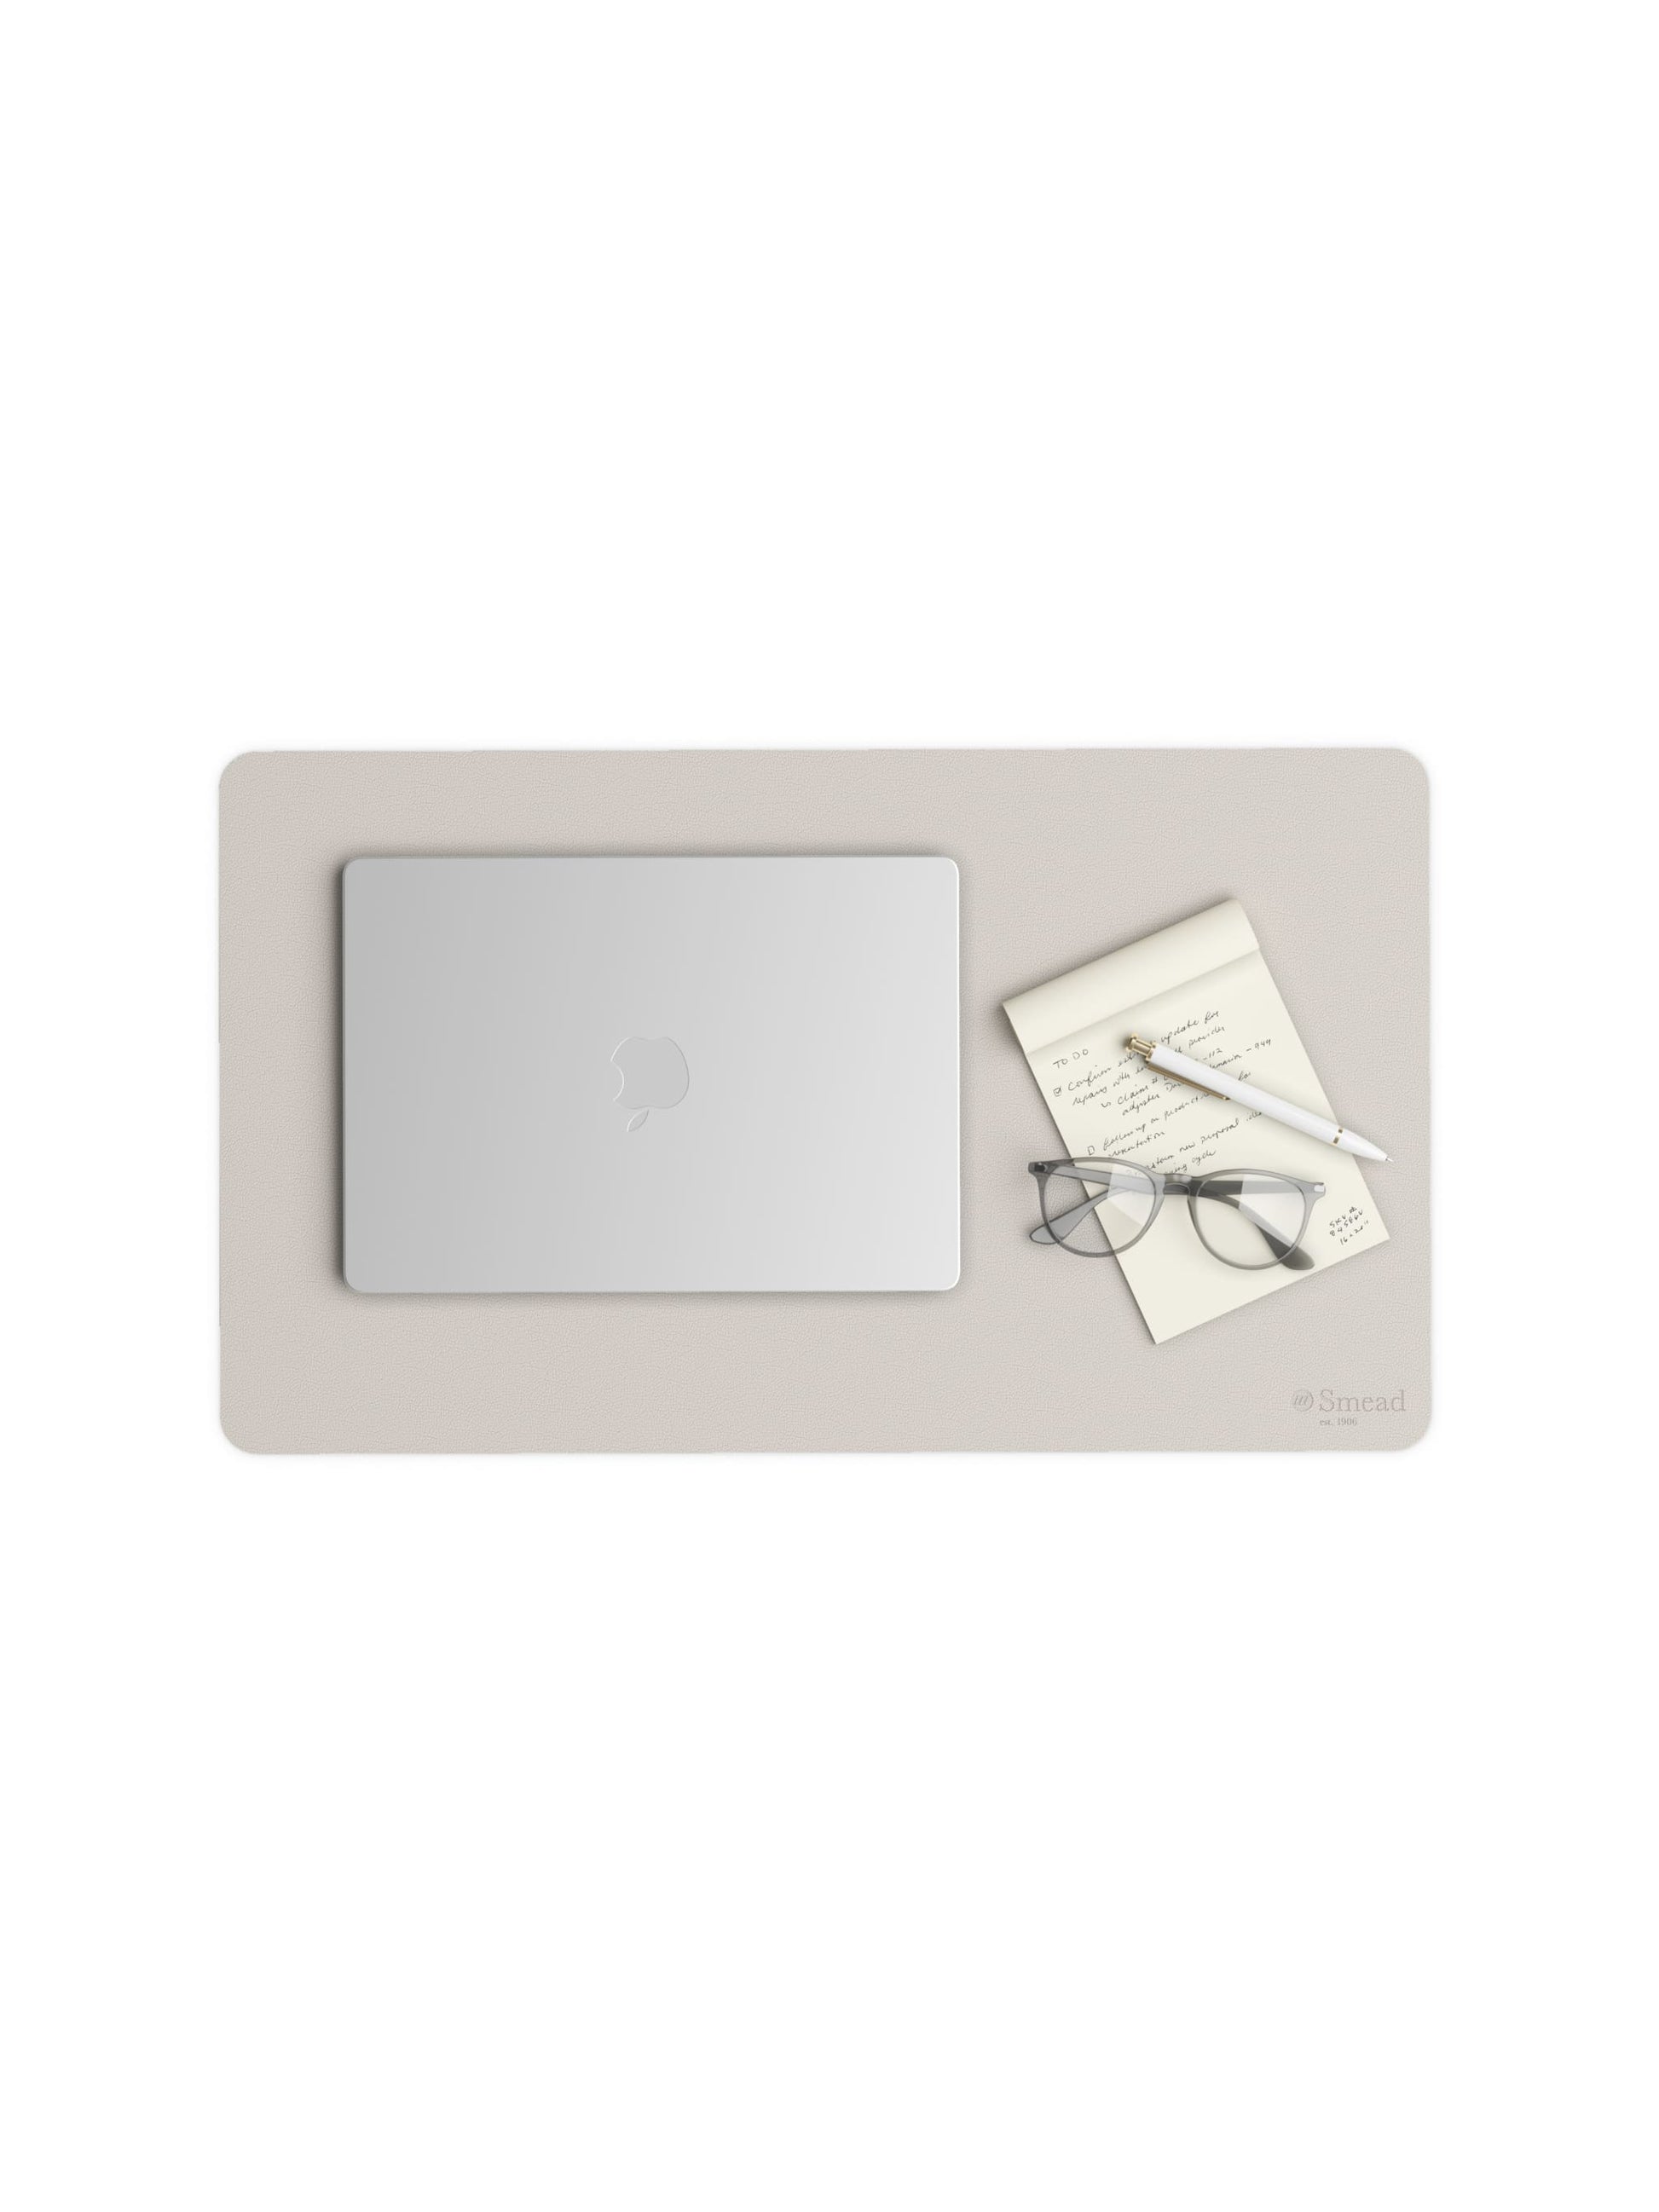 Vegan Leather Desk Pad, Sandstone Color, 23.6"X13.7" Size, 086486648363